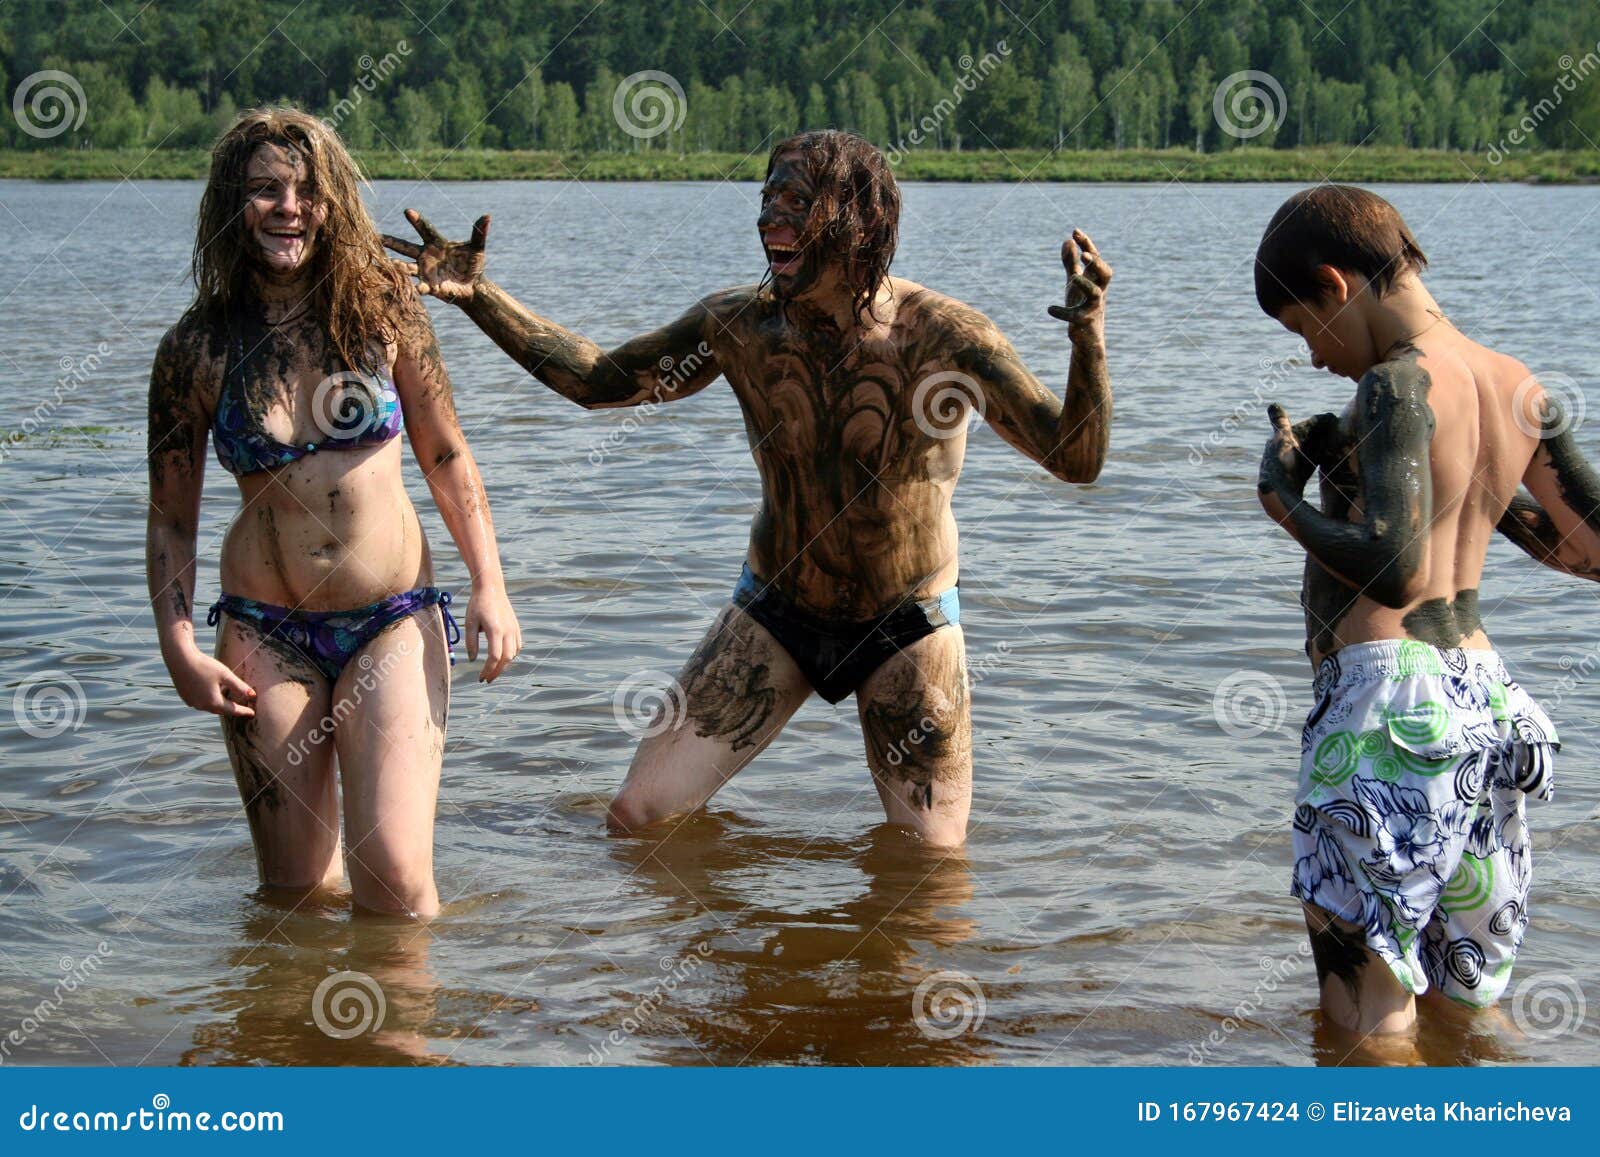 russian nudist families